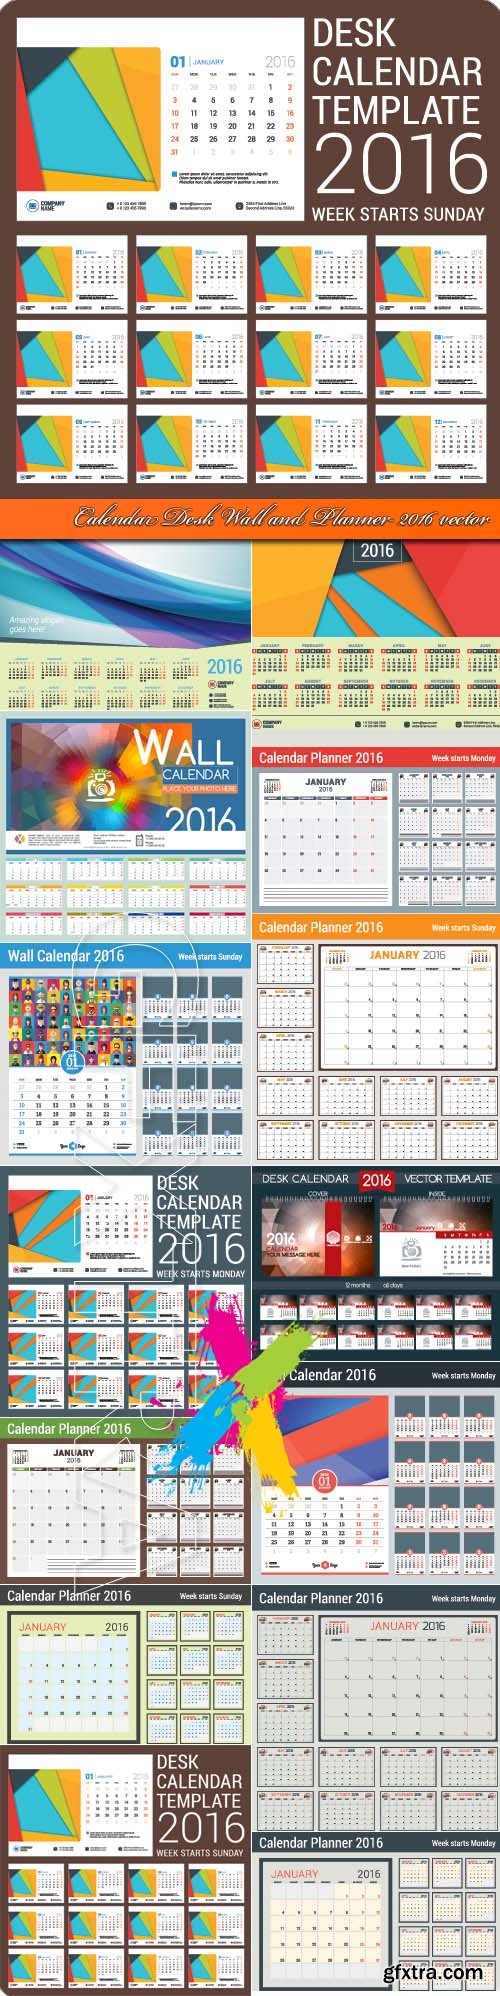 Calendar Desk Wall and Planner 2016 vector